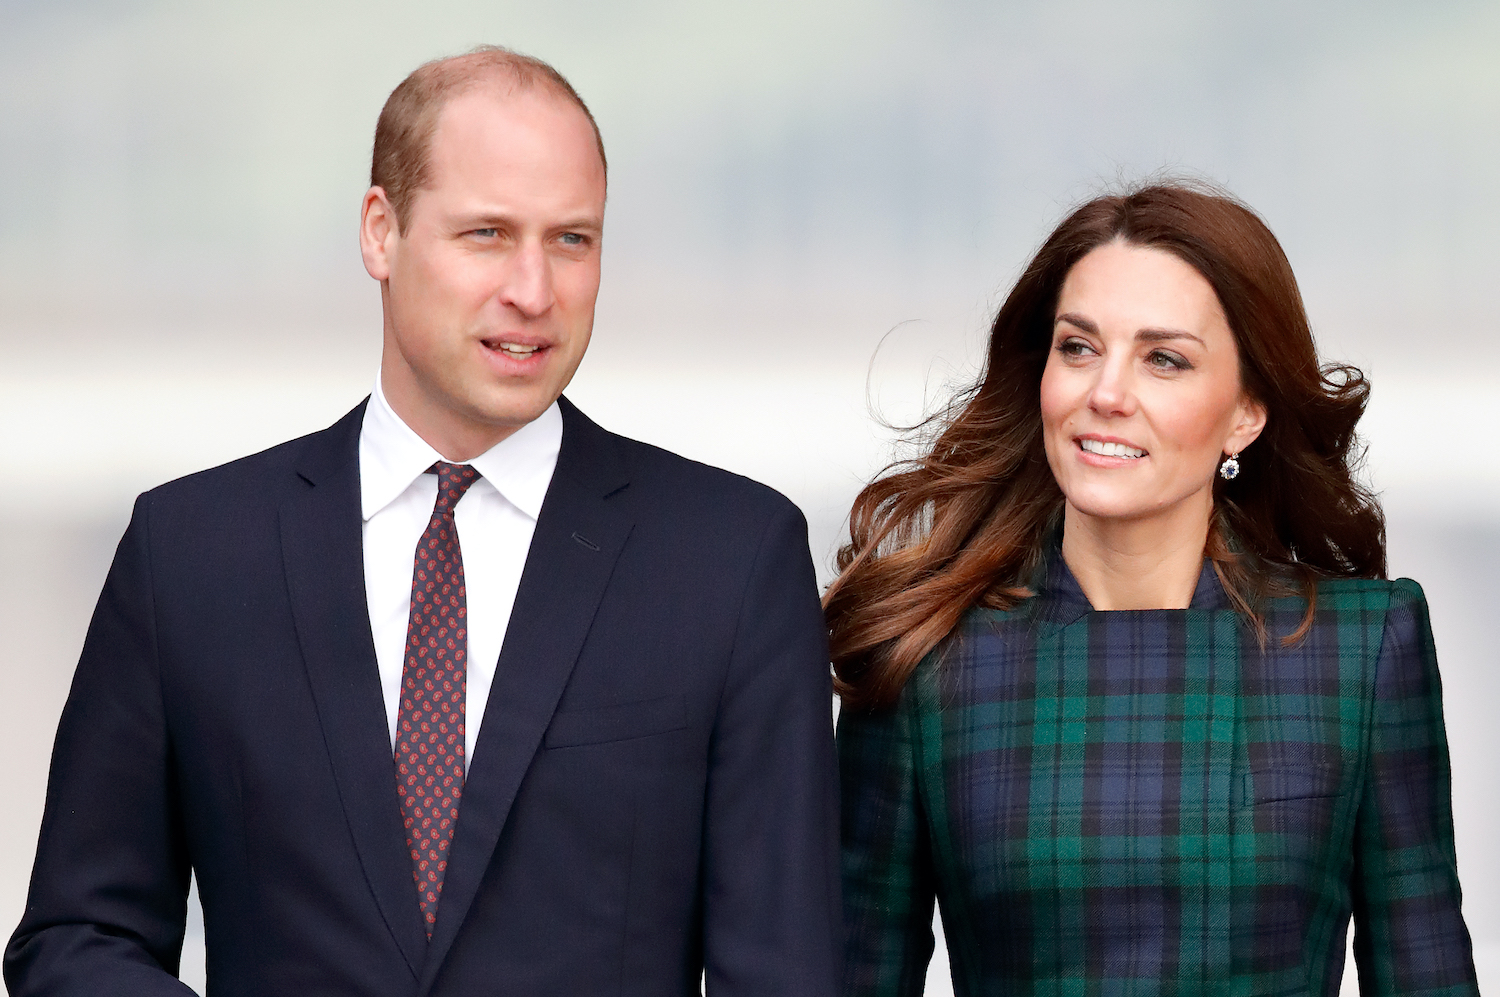 Prince William and Kate Middleton walk together smiling